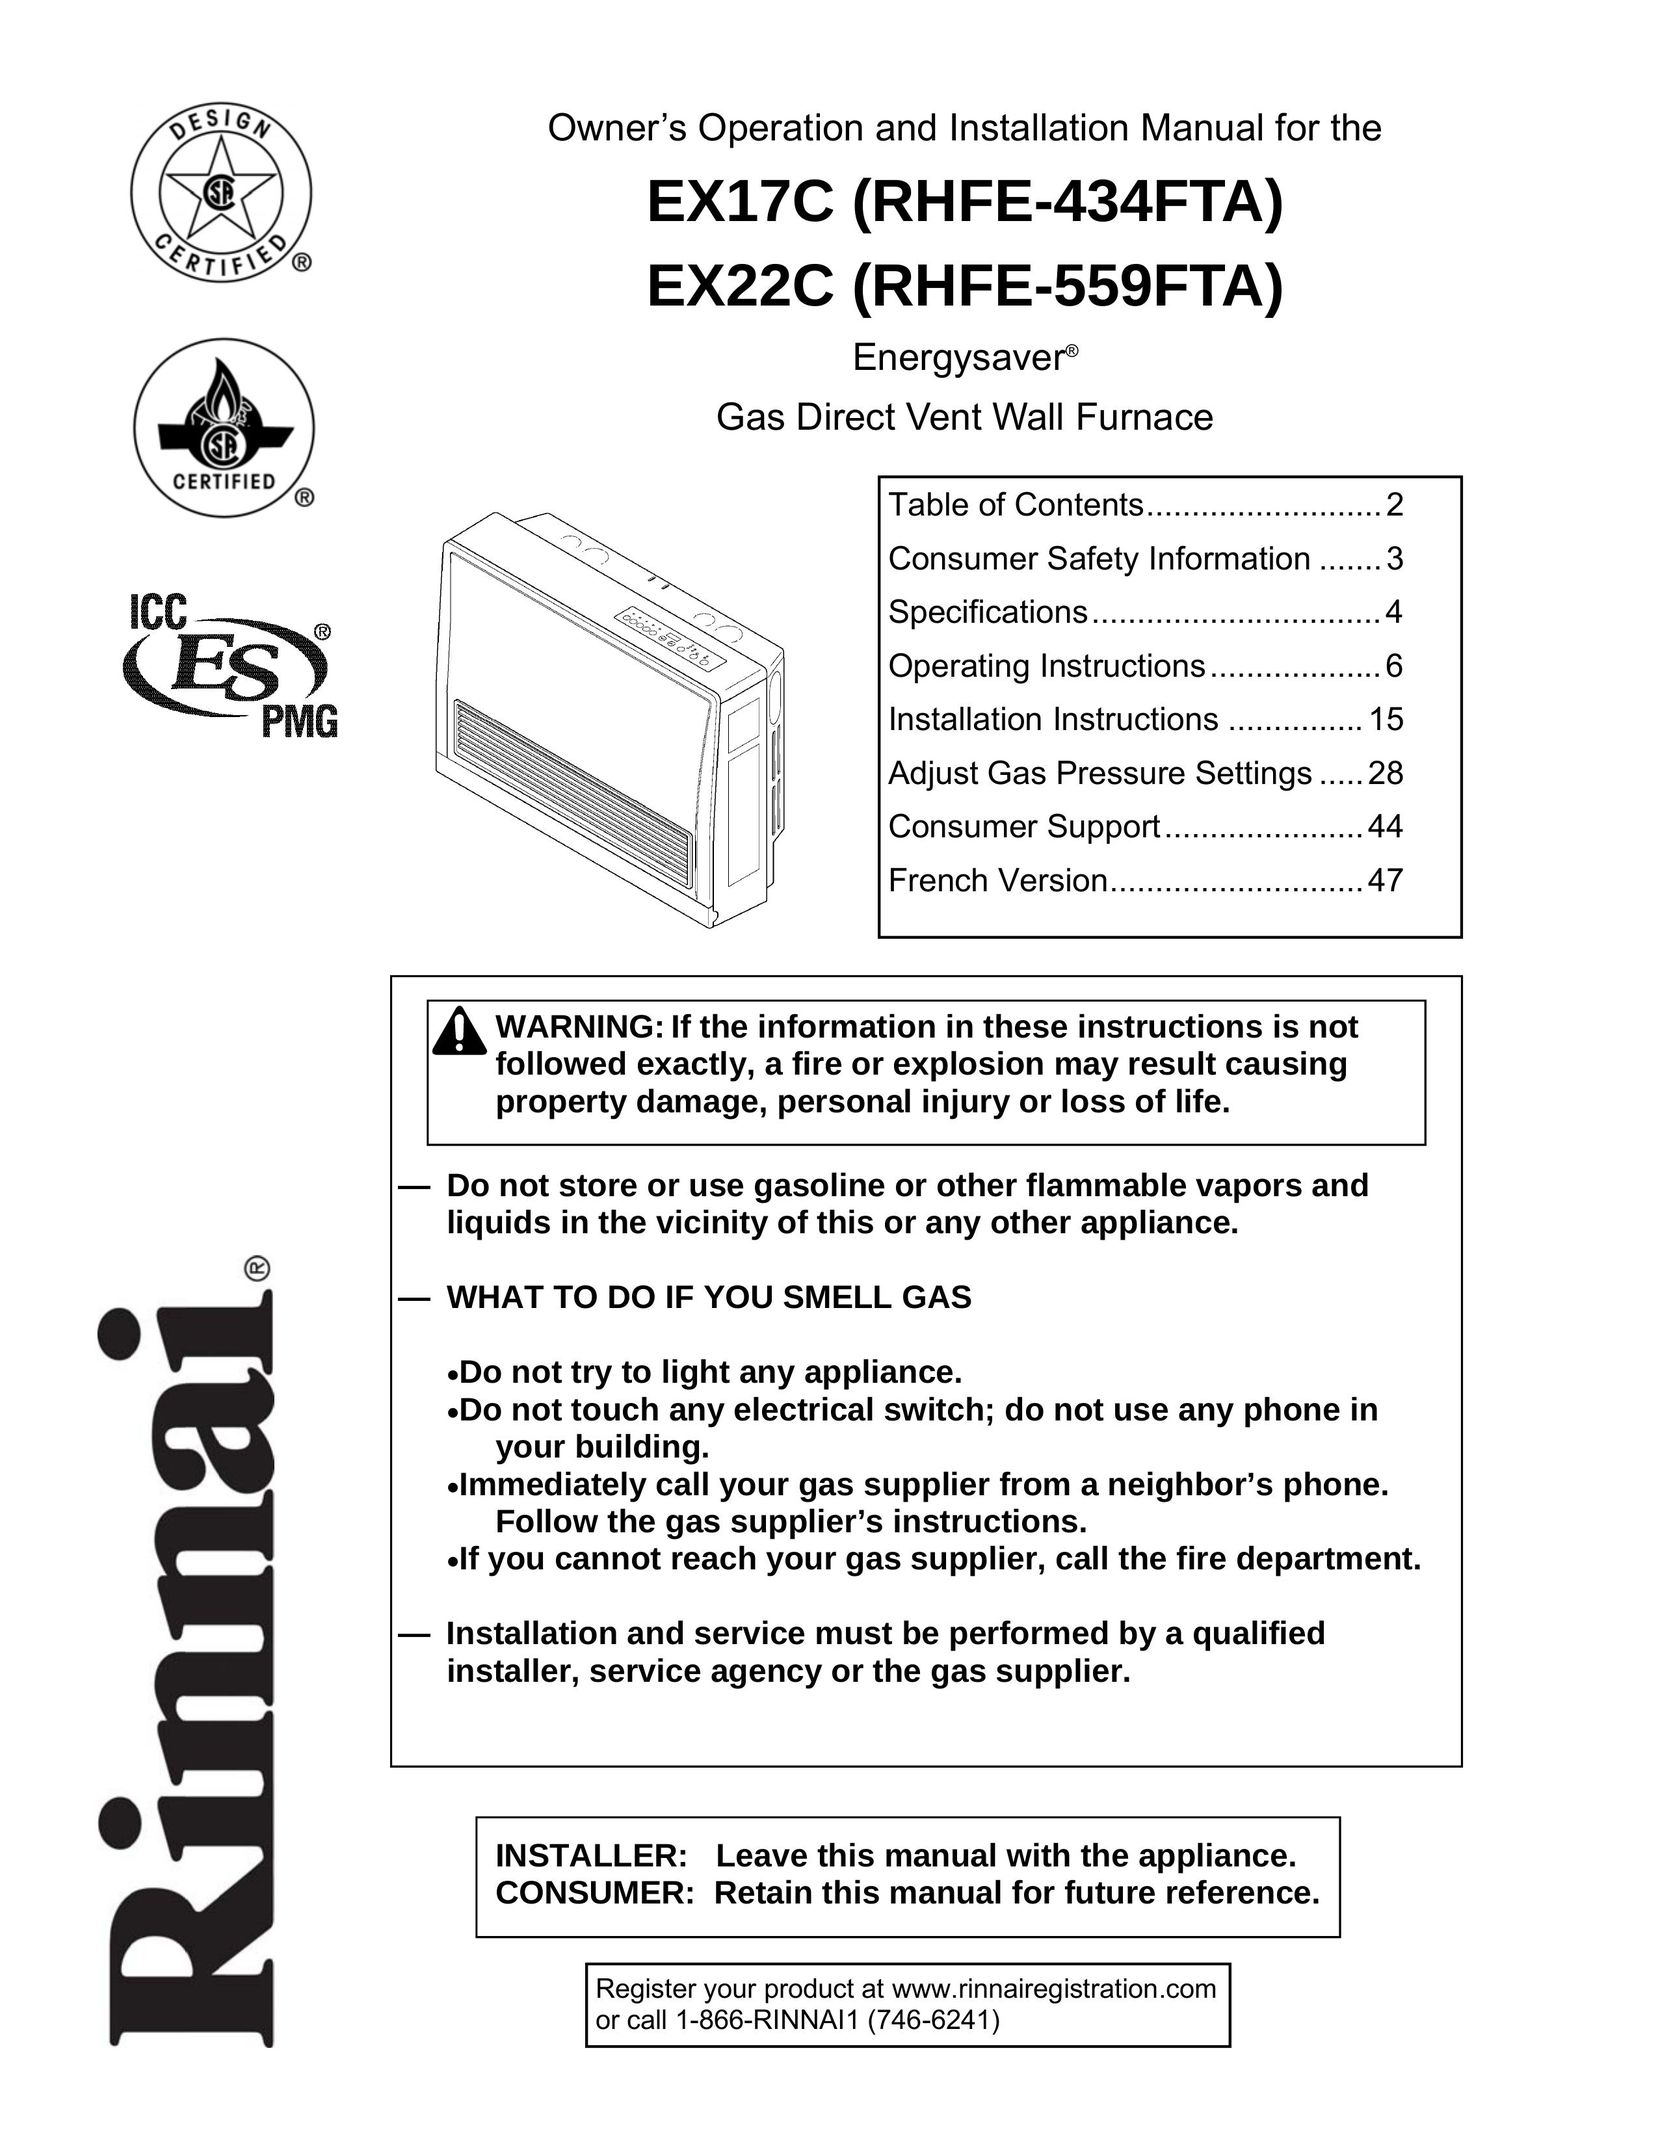 Rinnai EX22C (RHFE-559FTA) Furnace User Manual